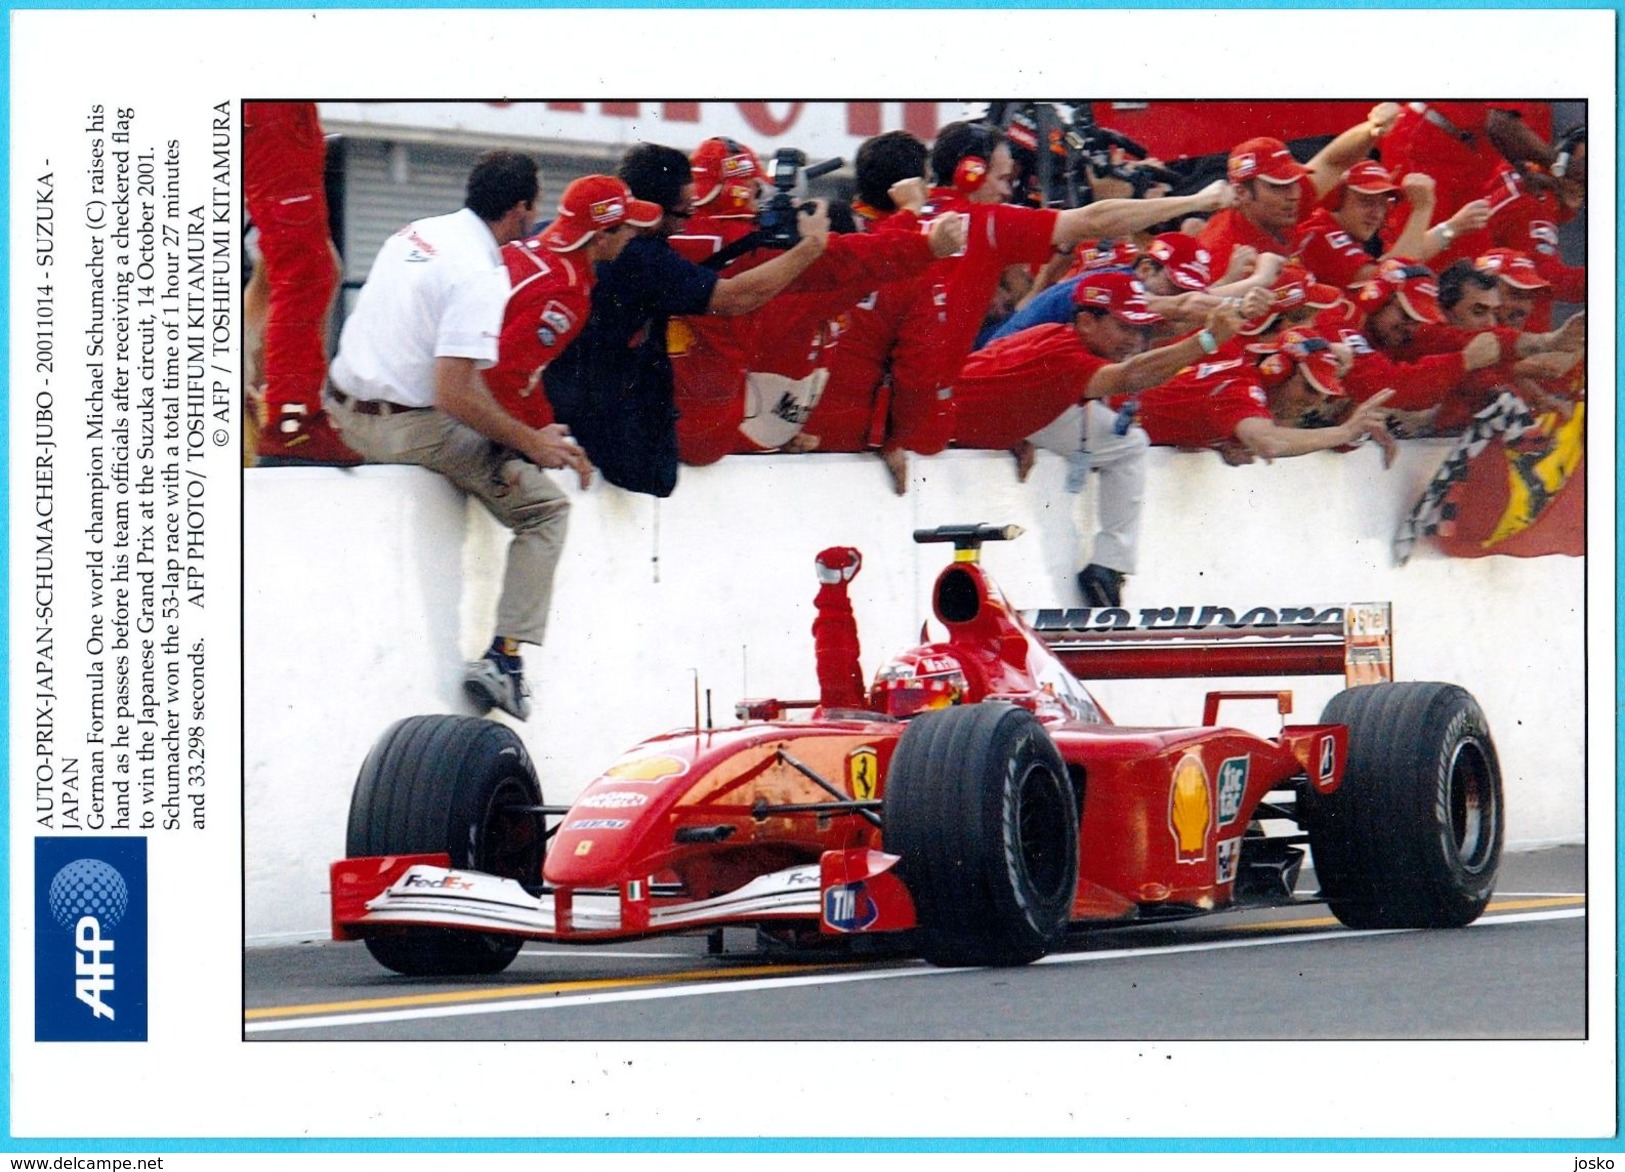 MICHAEL SCHUMACHER - Japan Grand Prix Suzuka 2001.*** BEAUTIFULL LARGE PHOTO *** Ferrari F1 Formula 1 Car Automobile - Car Racing - F1